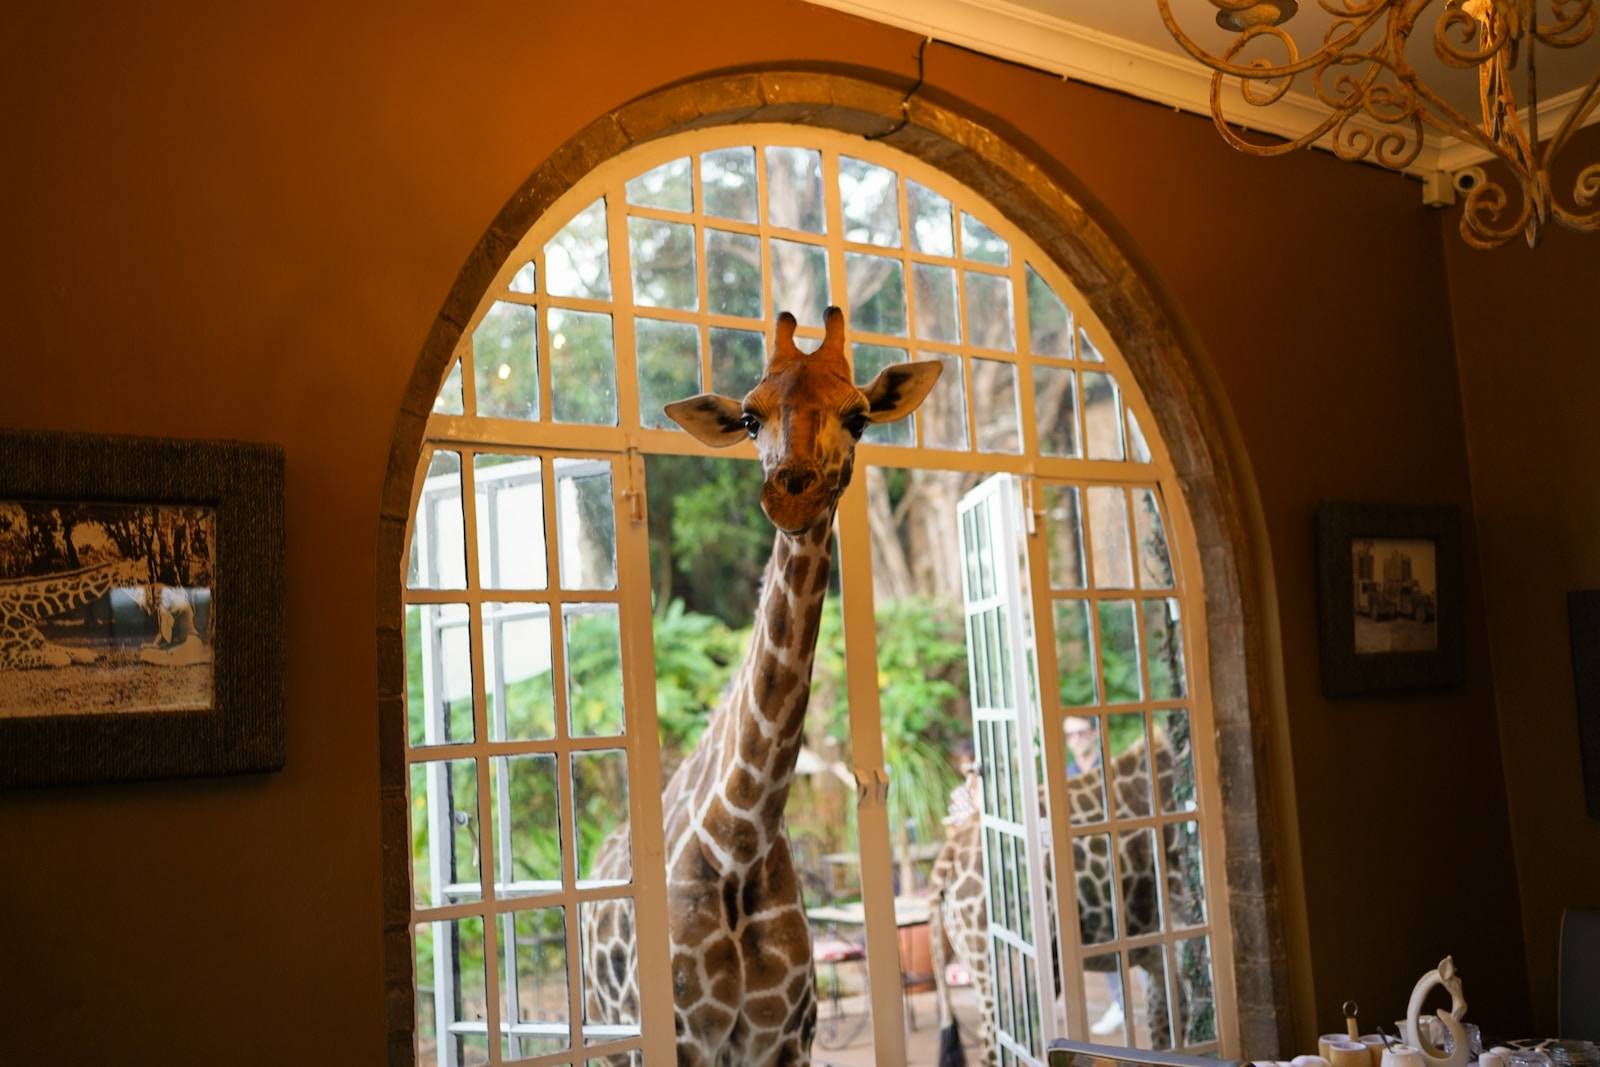 giraffe on window during daytime